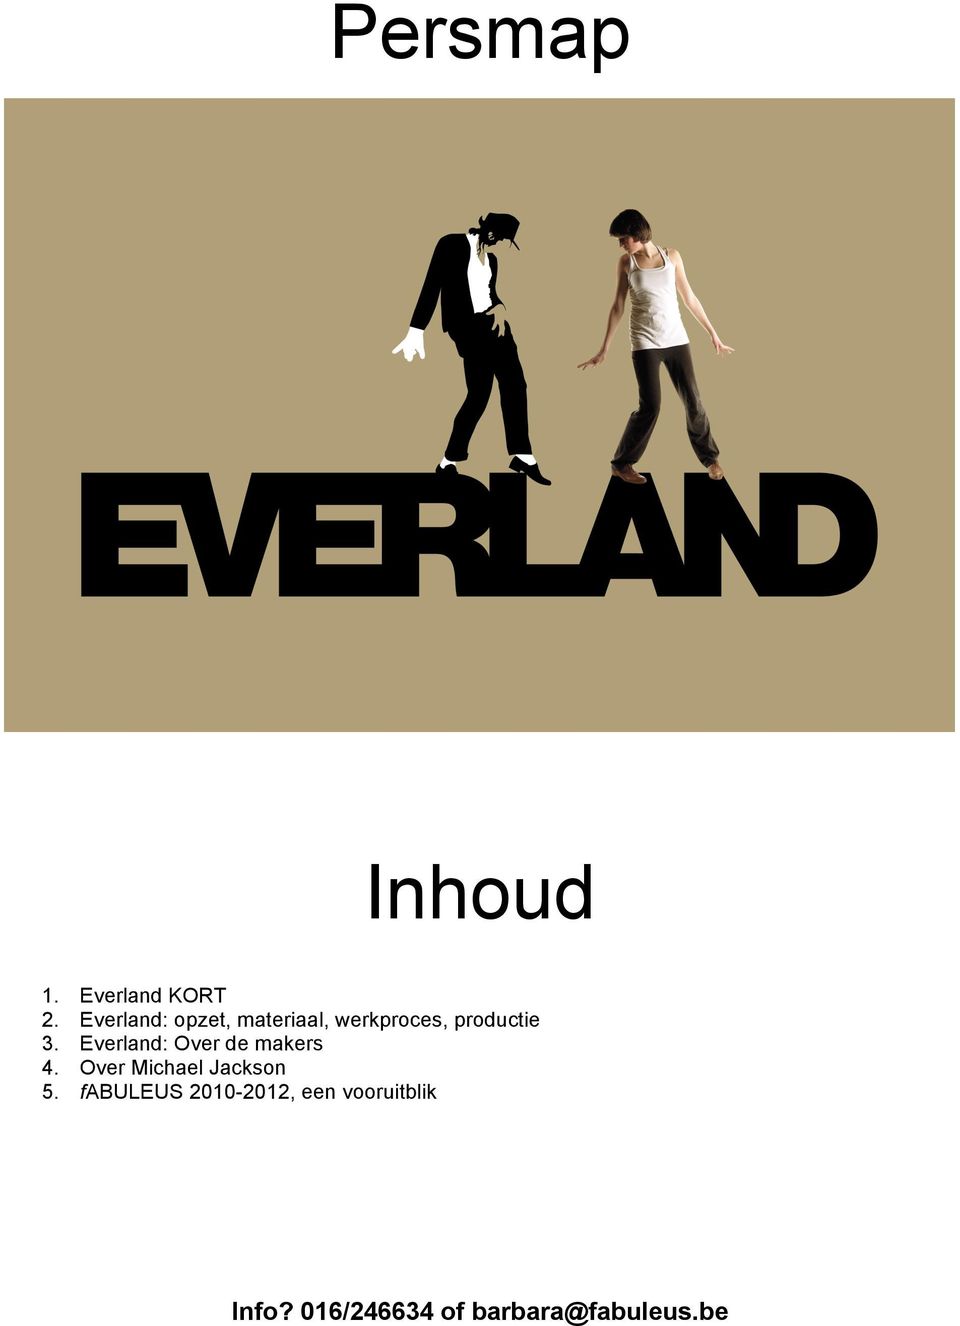 Everland: Over de makers 4. Over Michael Jackson 5.